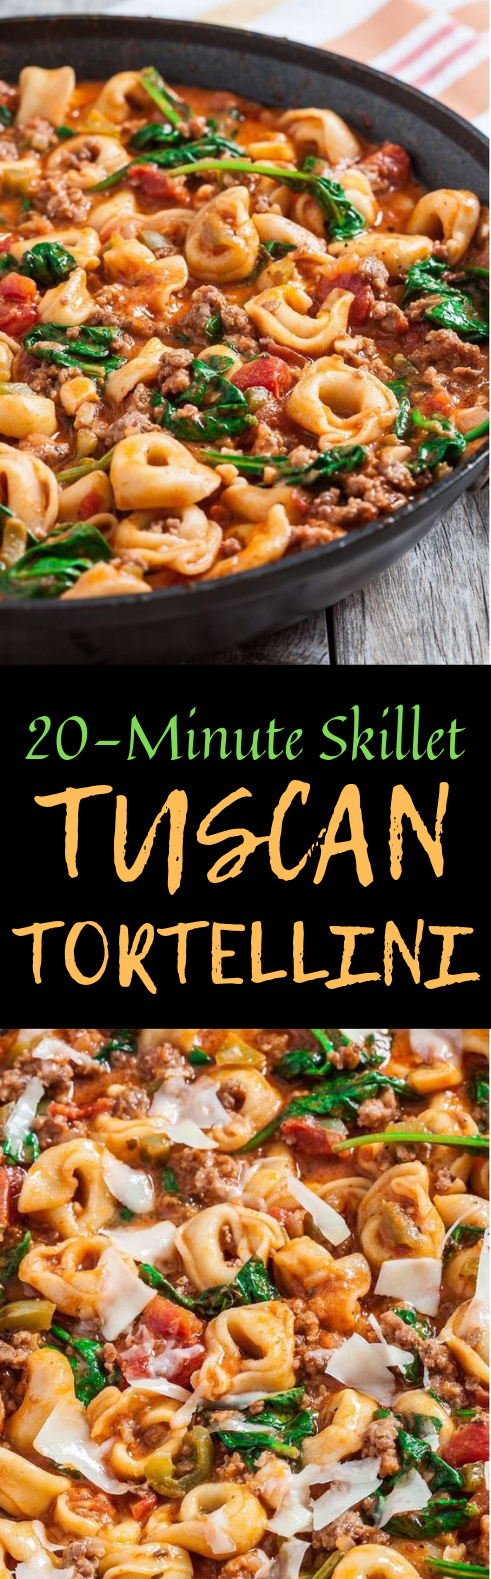 20-MINUTE SKILLET TUSCAN TORTELLINI #weeknightdinner #Tortellini